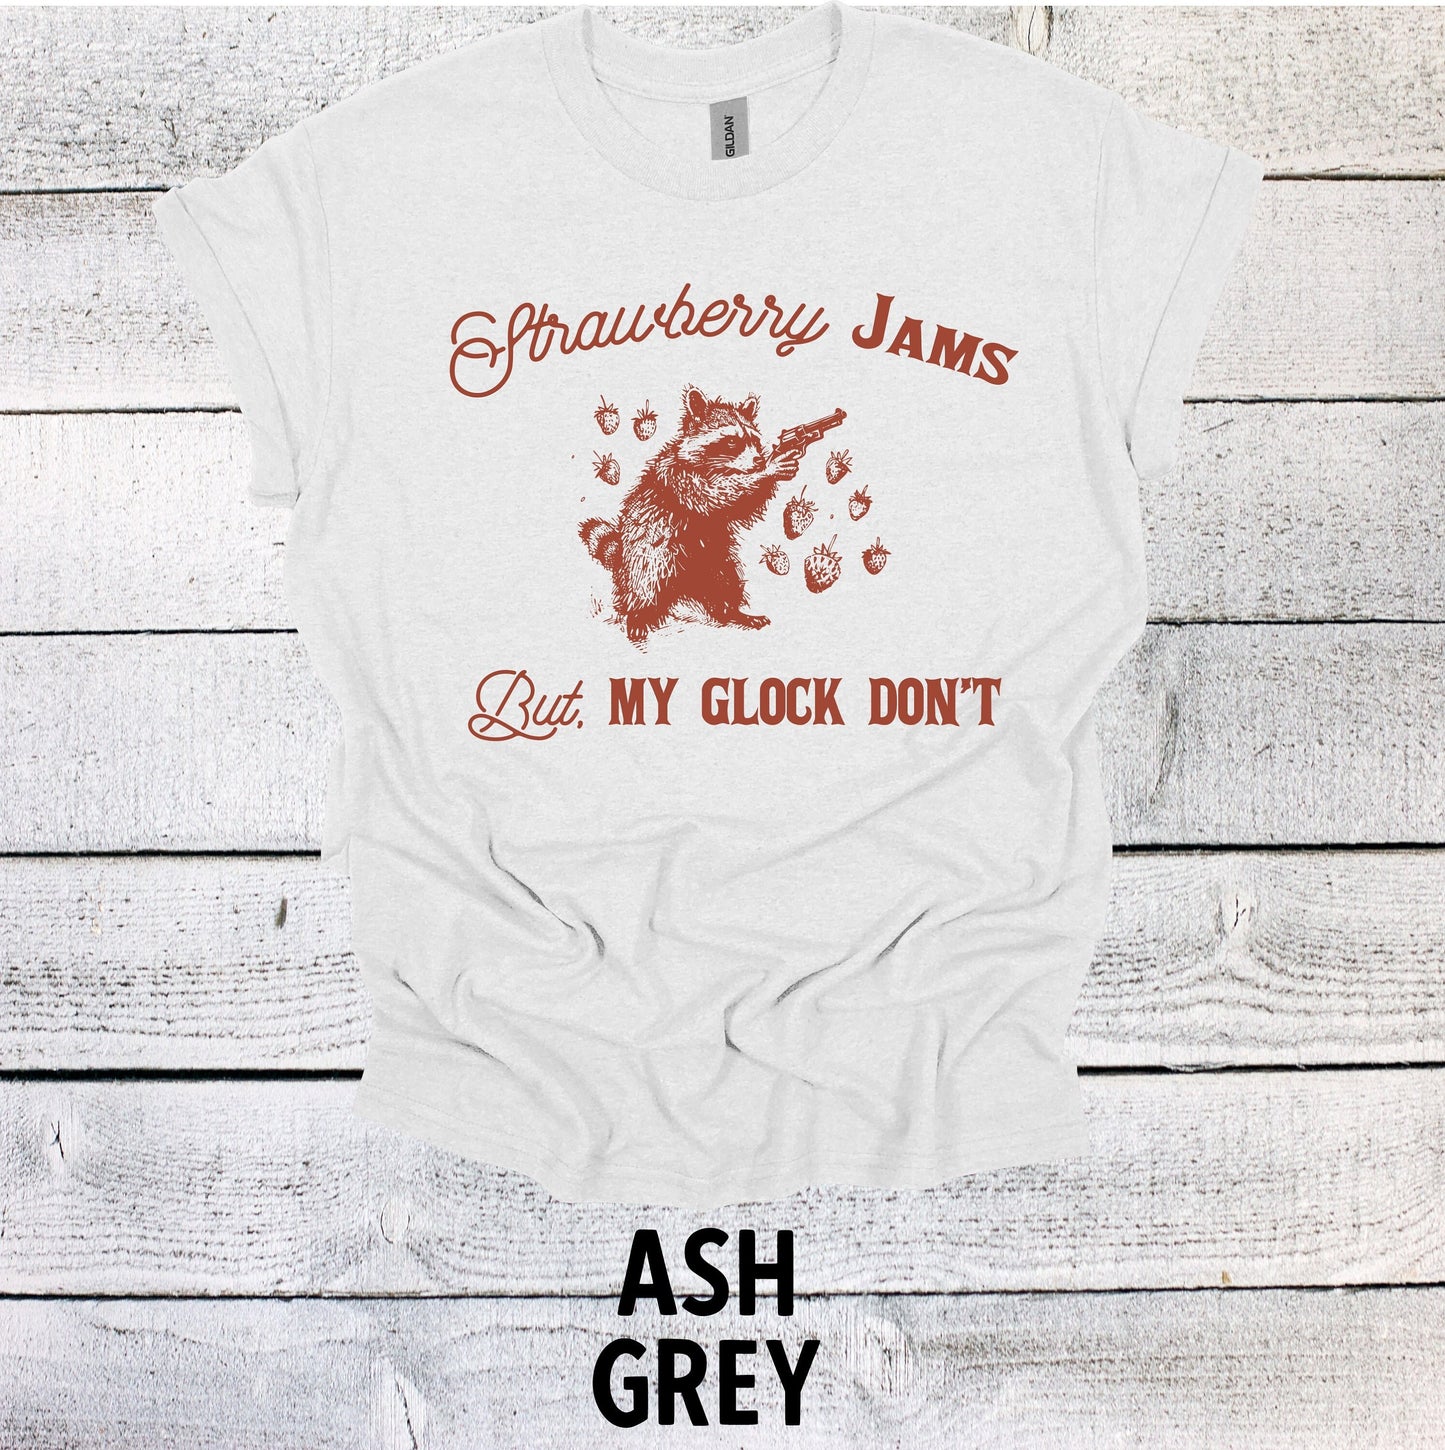 Strawberry Jams But My Glock Don't Shirt Graphic Shirt Funny Shirts Vintage Funny TShirts Minimalist Unisex Shirt Nostalgia Shirt